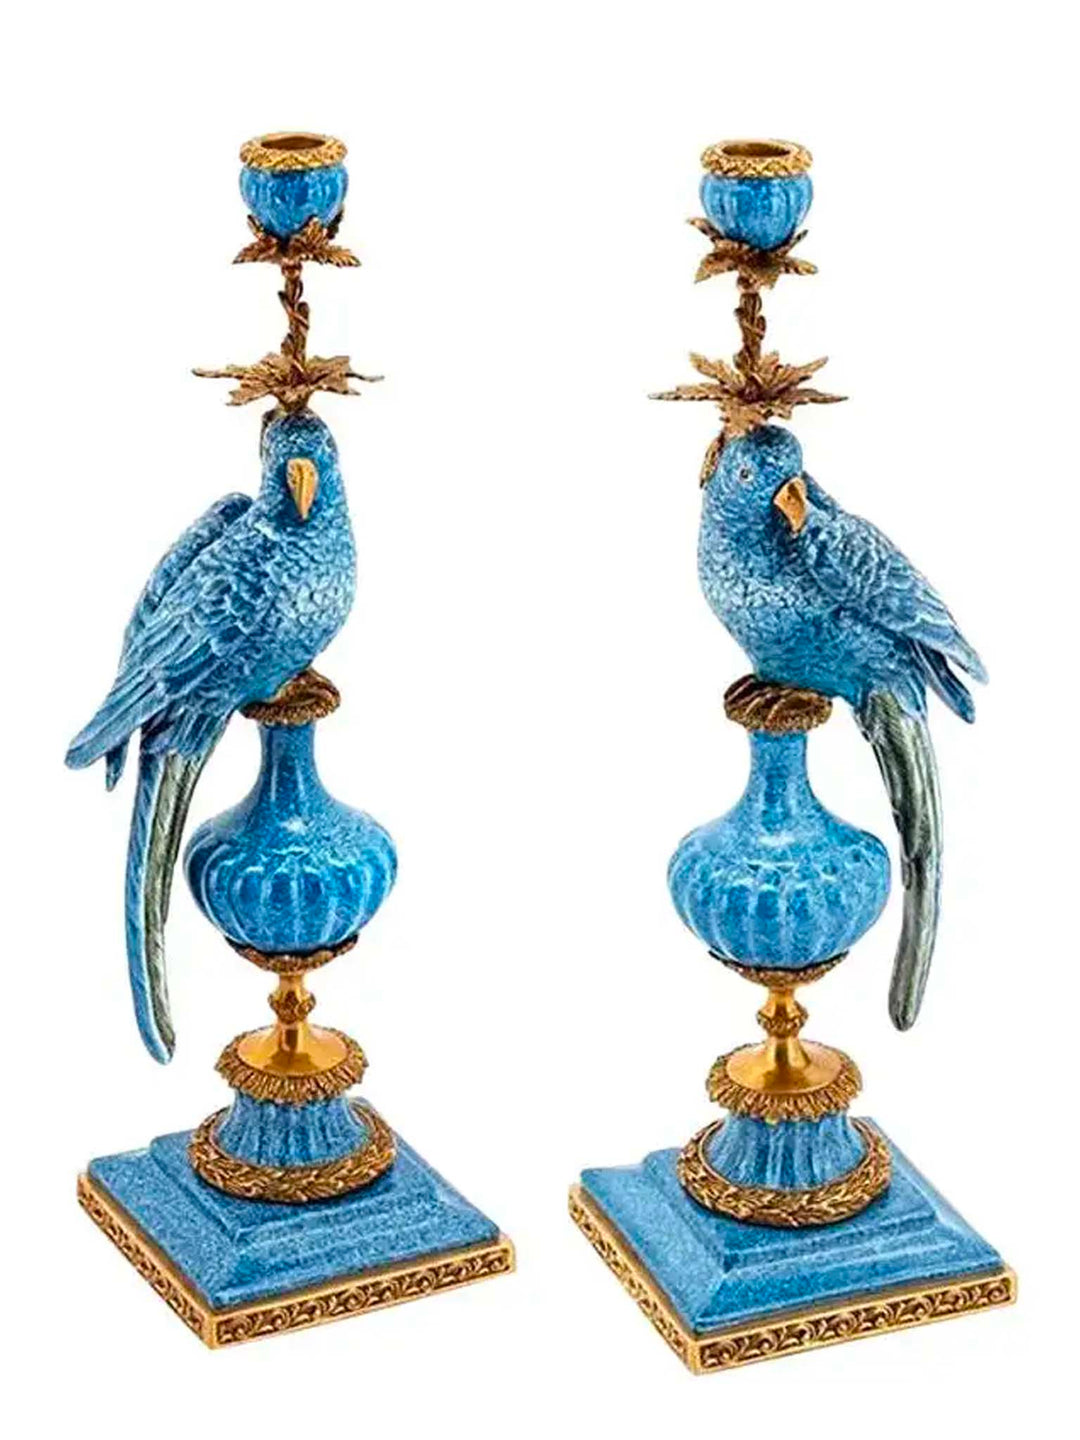 Candleholder Parrot Atlántida, Blue bird candle sticks, blue parrot